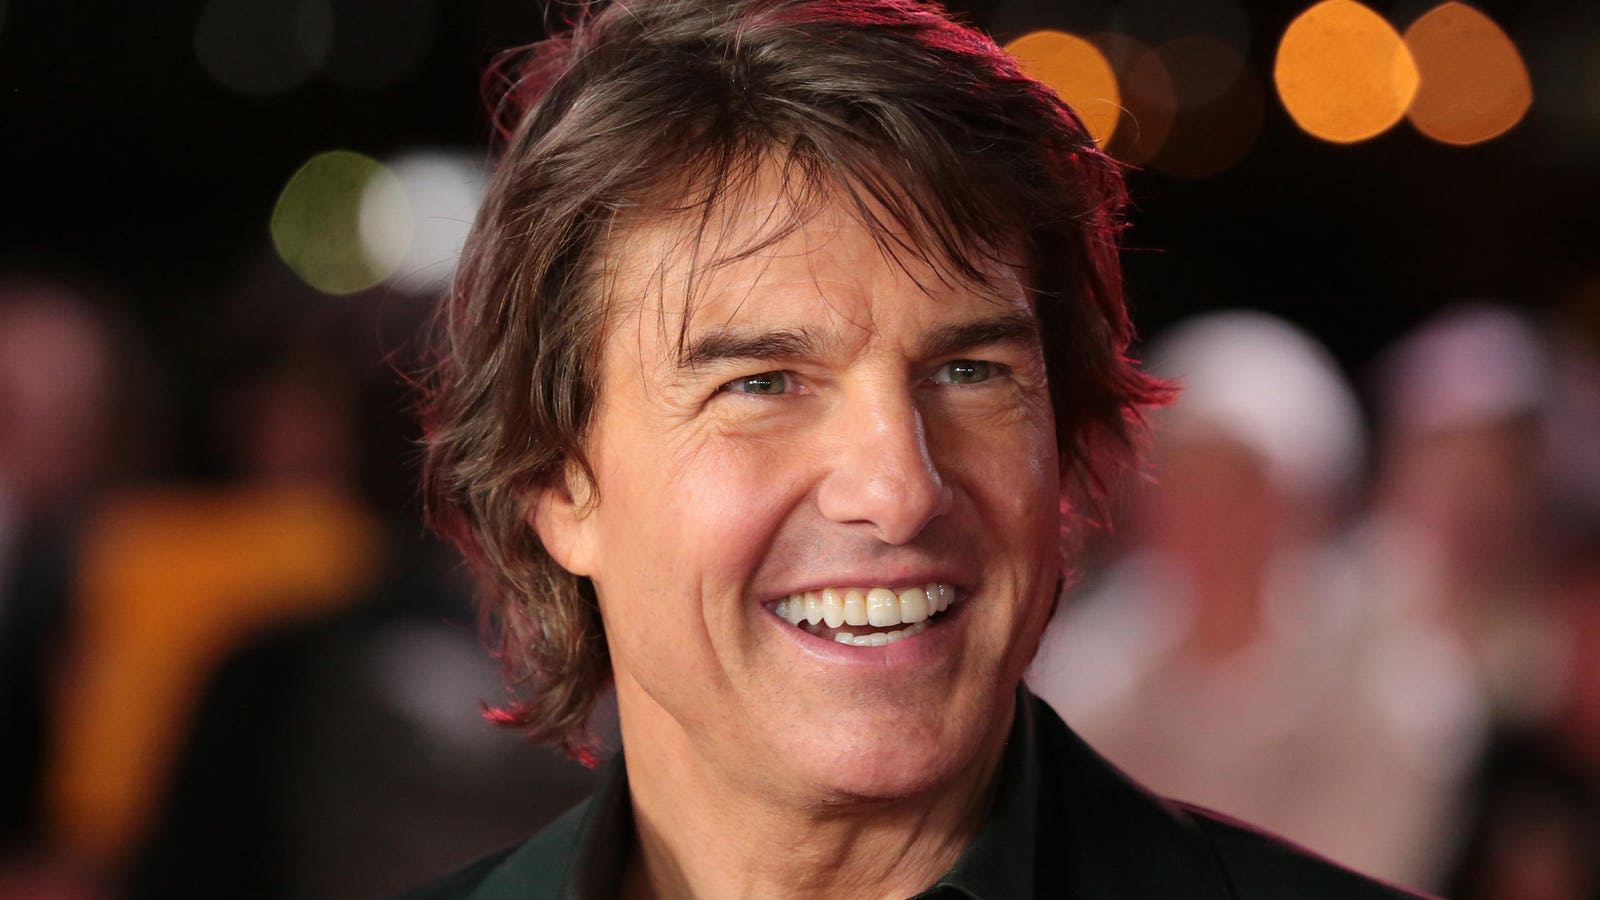 Tom Cruise’s ‘Jack Reacher’ Movies Are Trending Big On Netflix